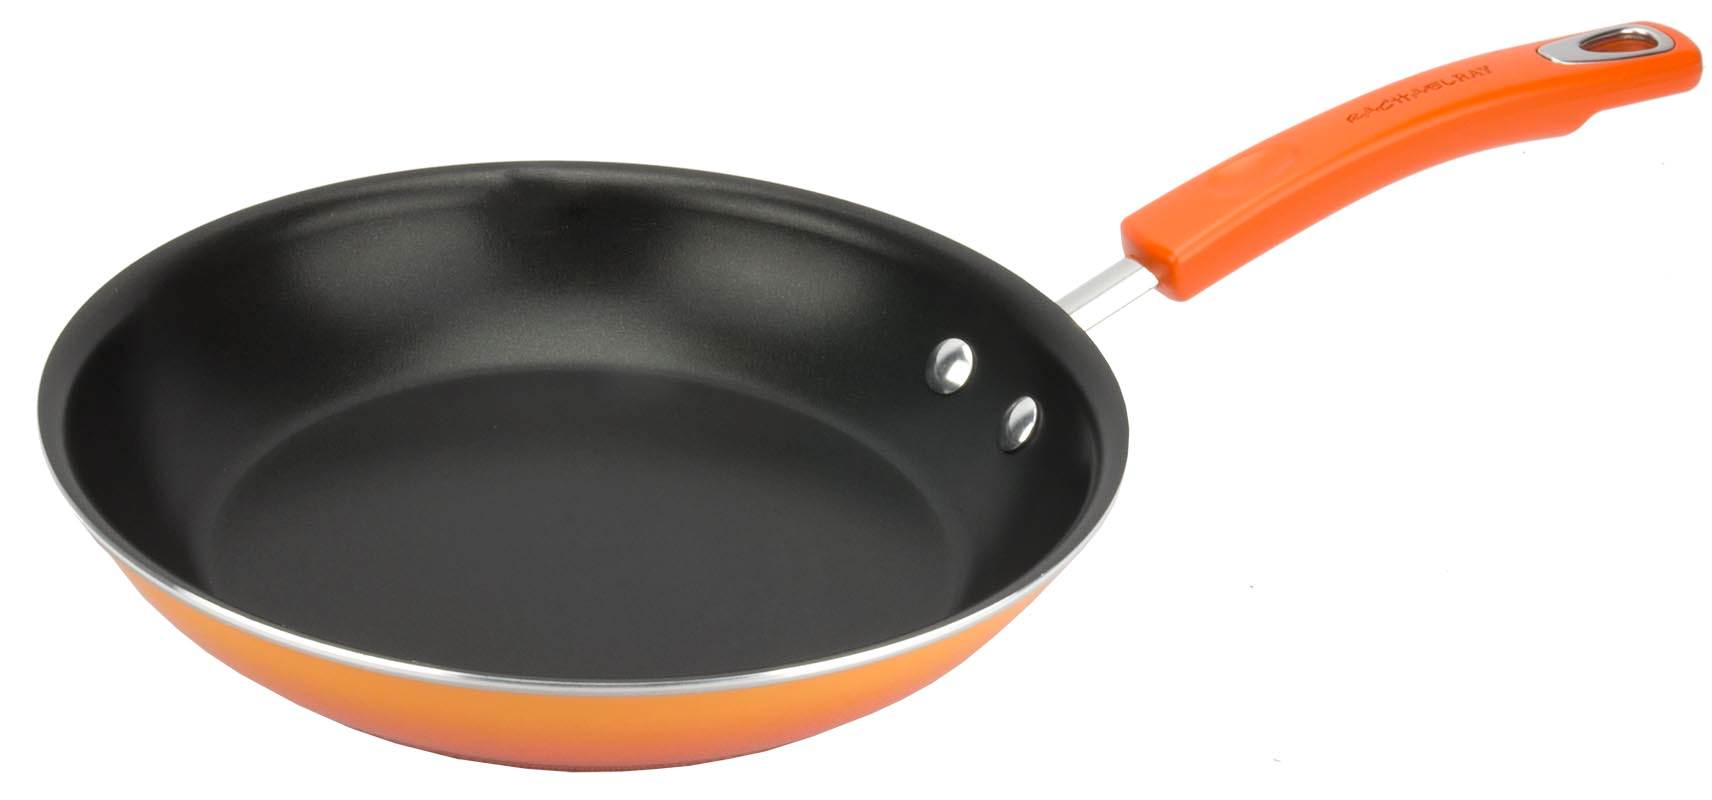 Rachael Ray 10-Piece Kitchen NonStick Hard Enamel Cookware Set Pots Pans, Orange - image 2 of 9